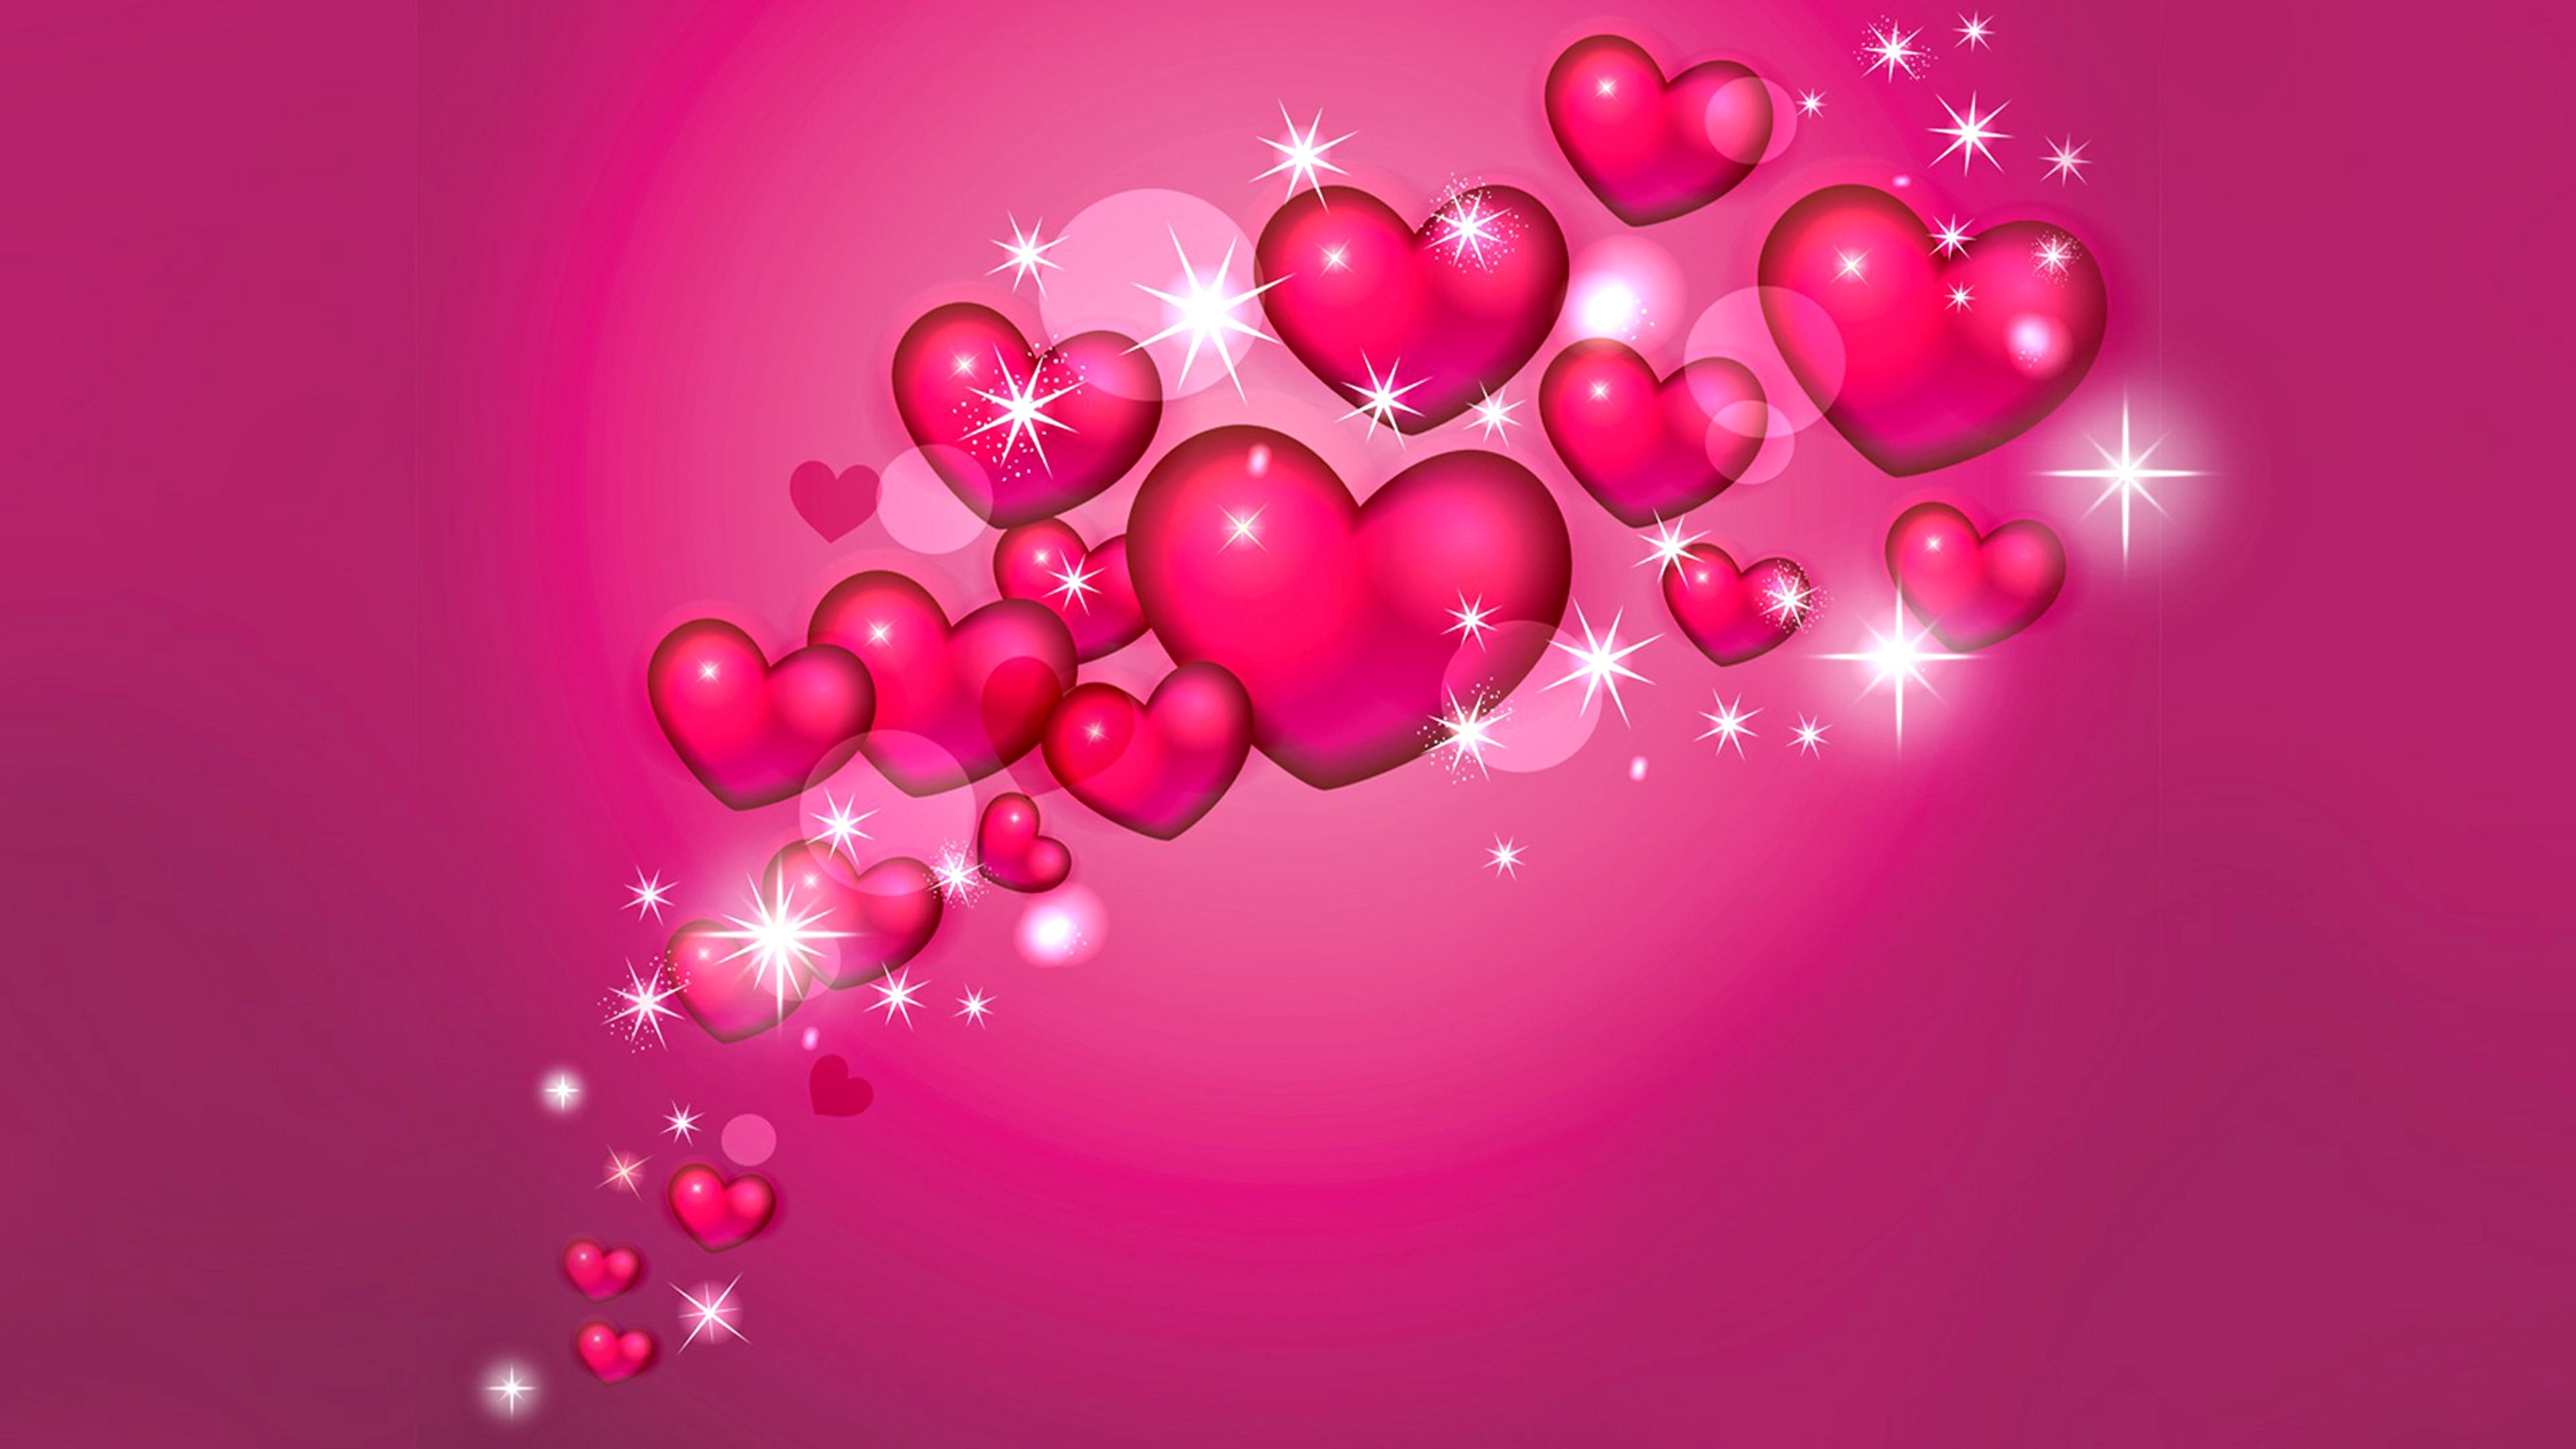 3840x2160 Love Pink Heart Wallpaper Big Discounts, 43% OFF